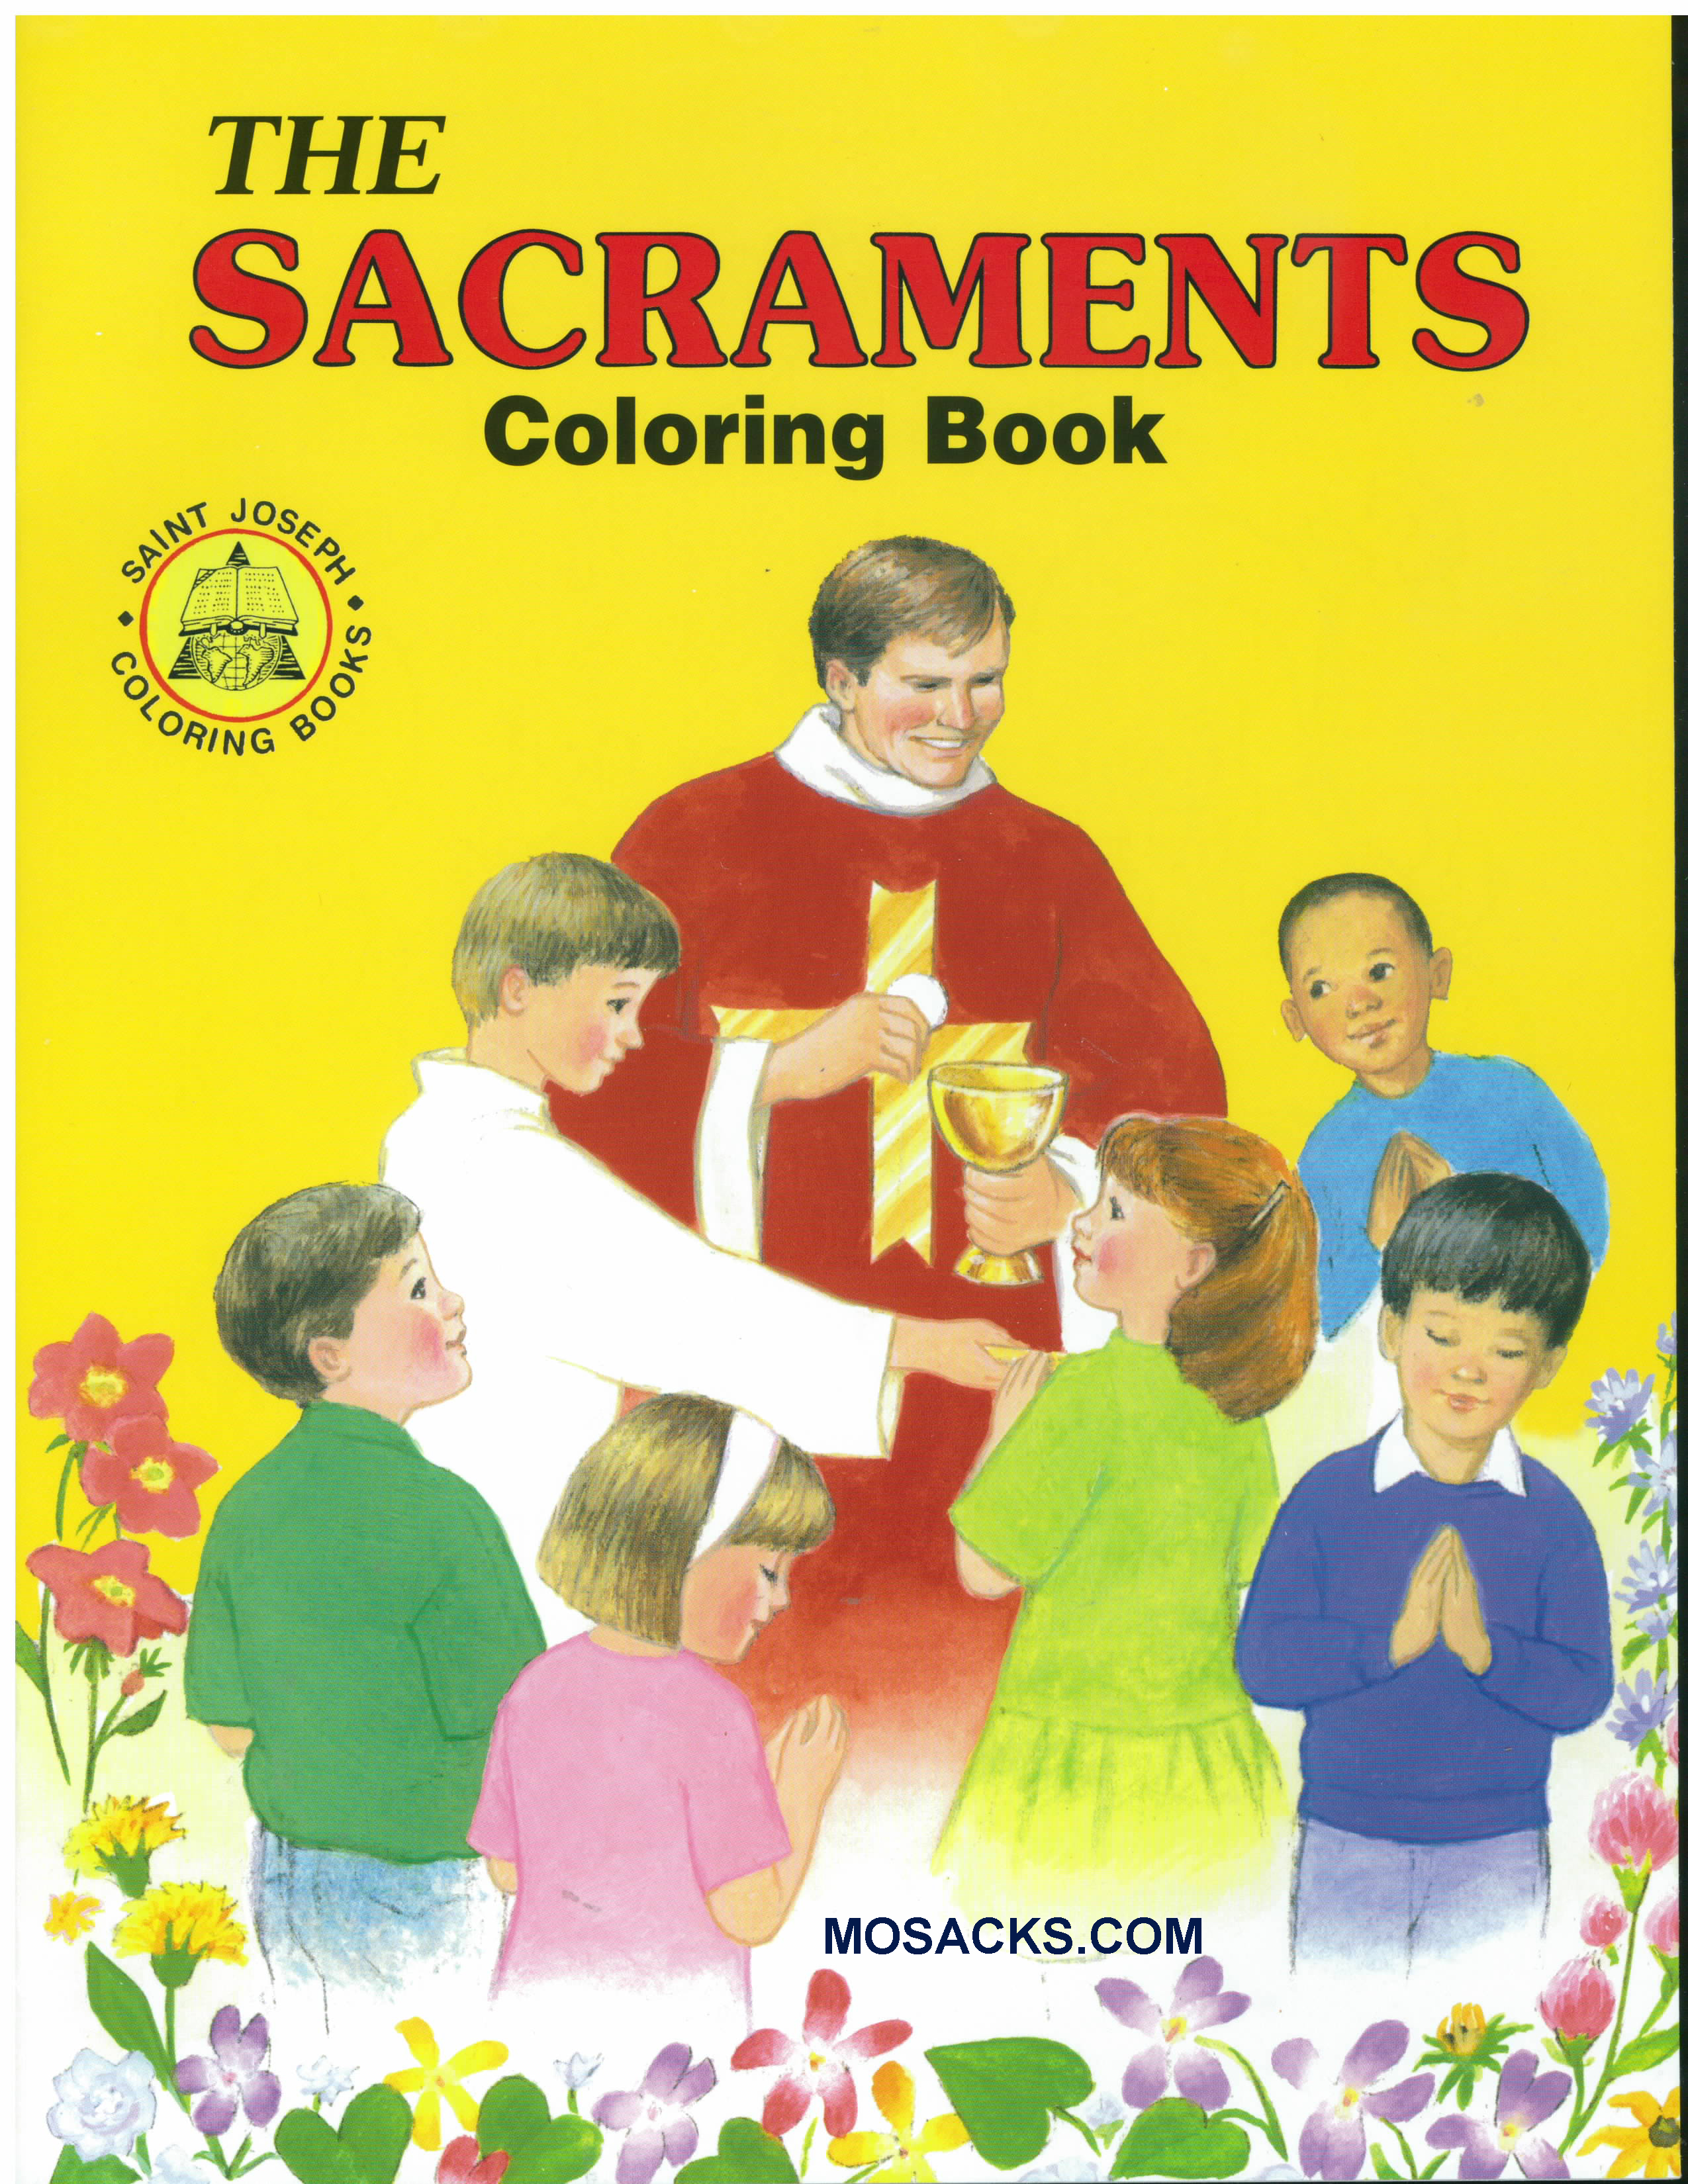 St Joseph 32 page Coloring Book The Sacraments-687